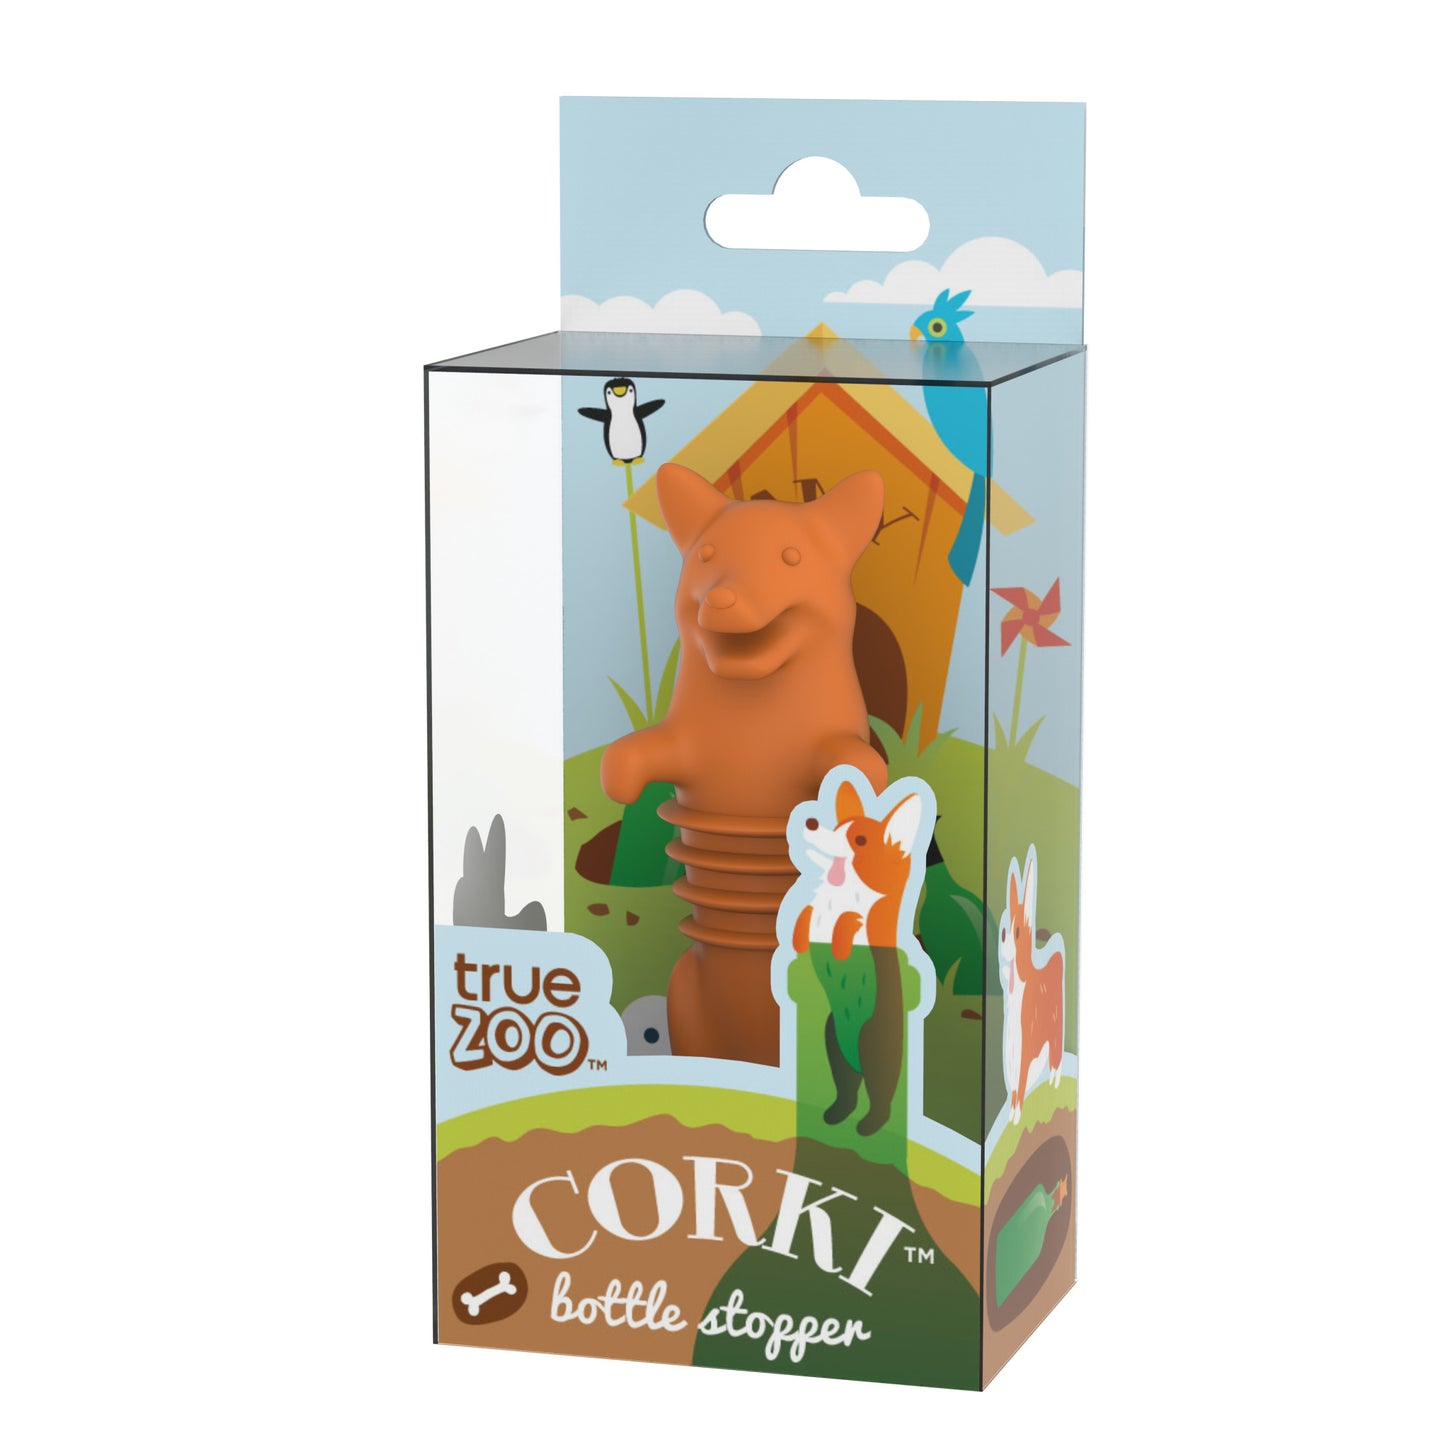 Corki™ Bottle Stopper